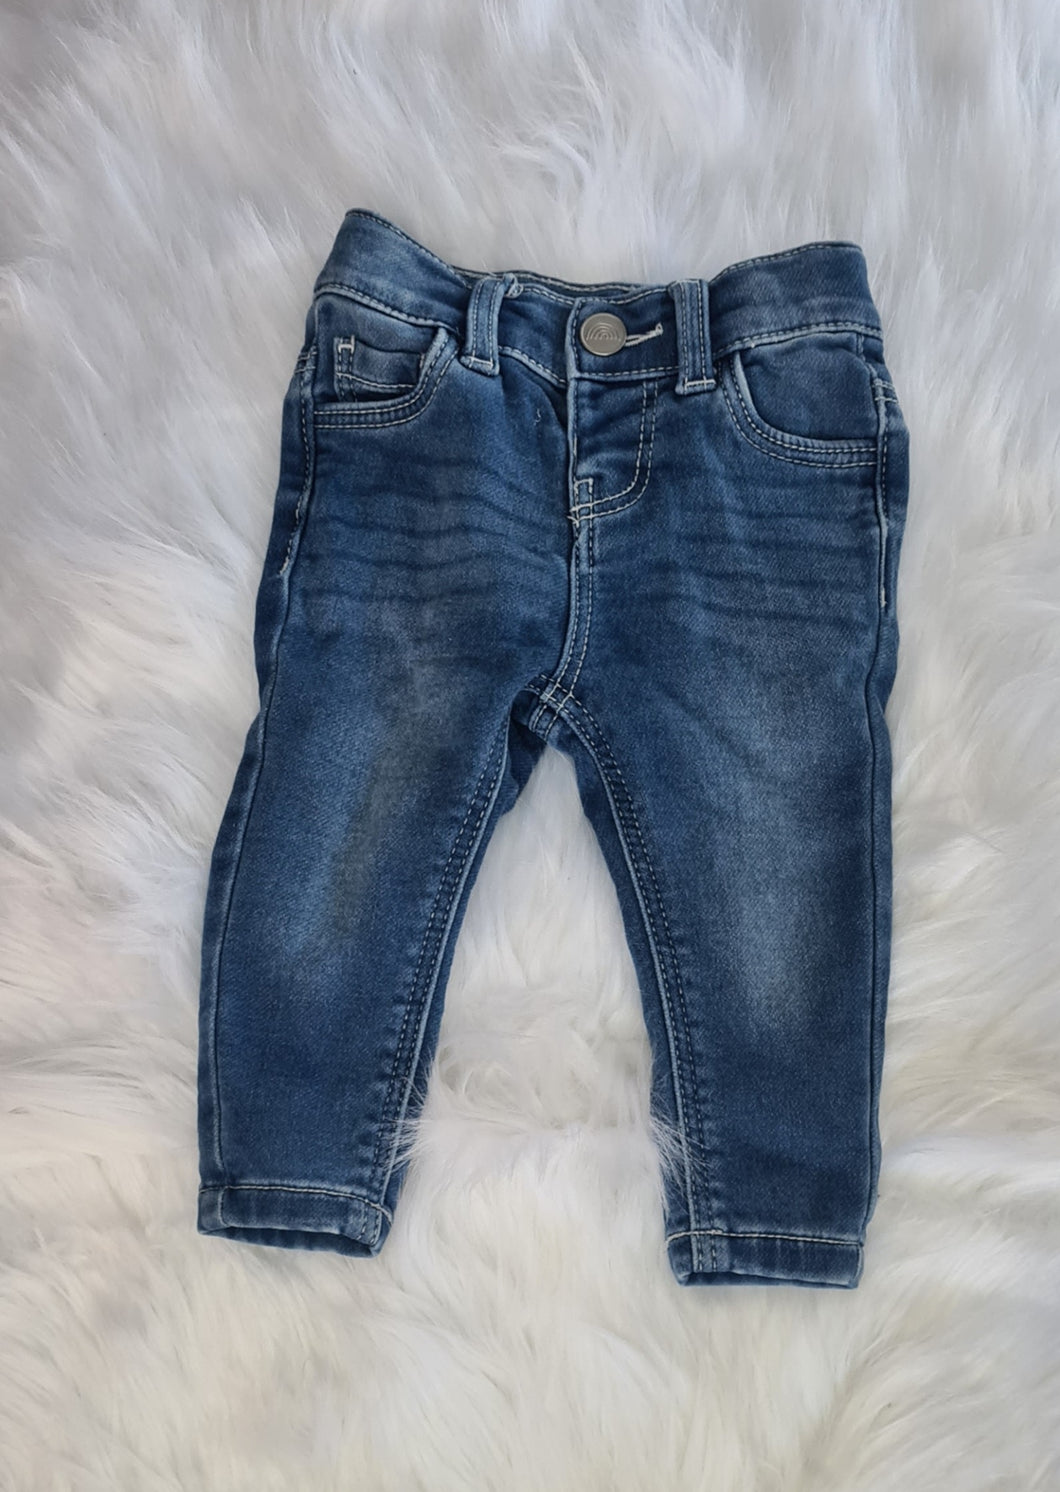 Boys 3-6 Months - Navy Blue Jeans